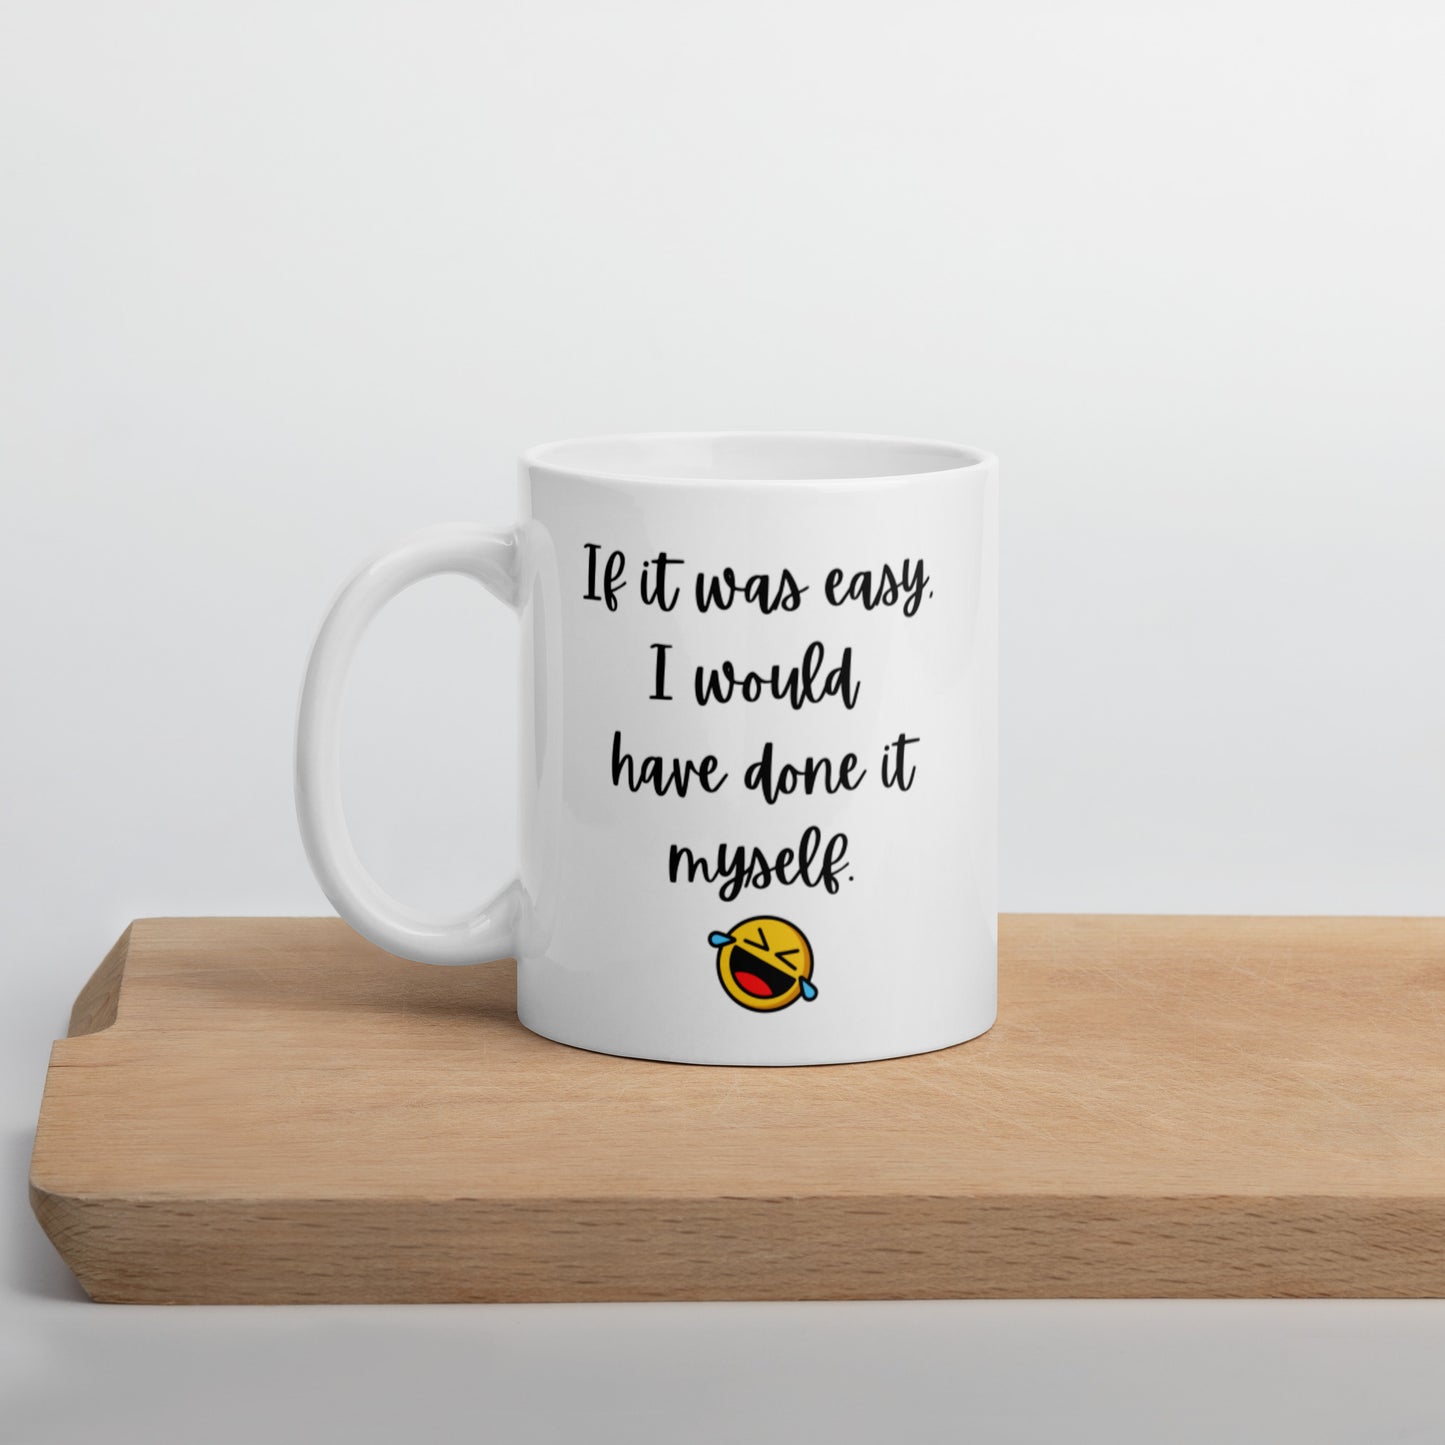 If it were easy mug - The Good Life Vibe